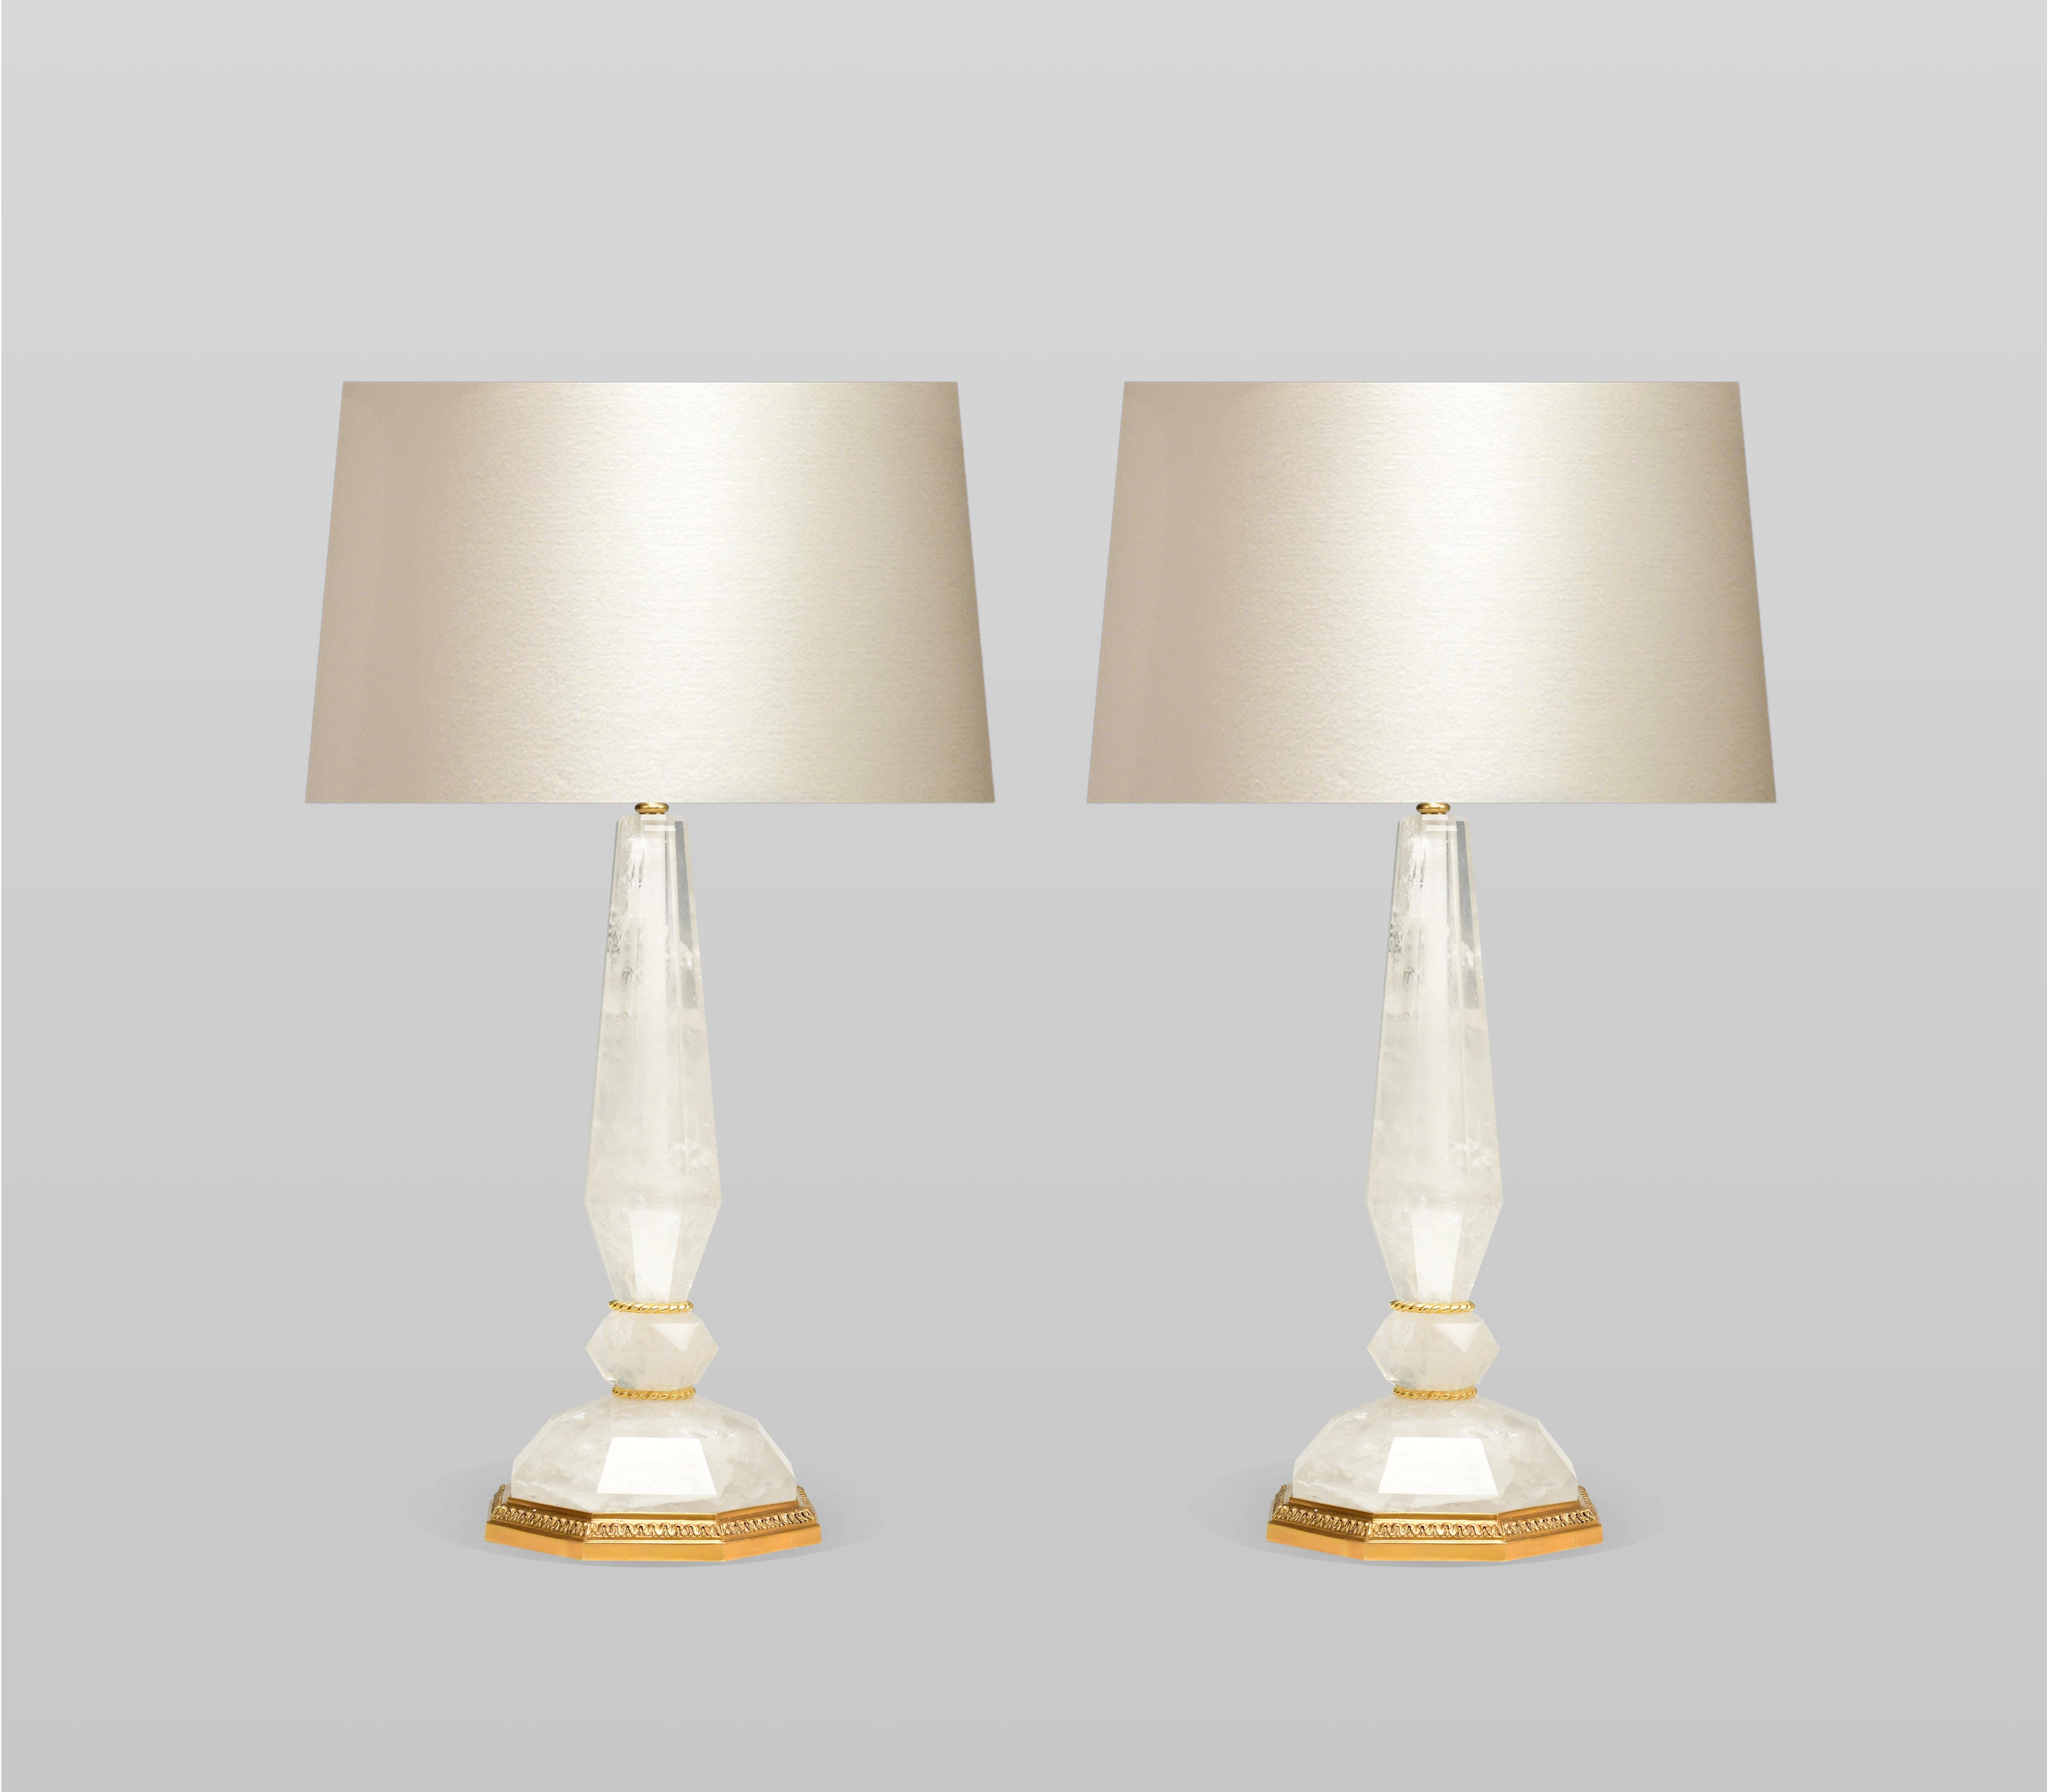 A pair of ormolu-mounted rock crystal lamps. 
Measures: 15